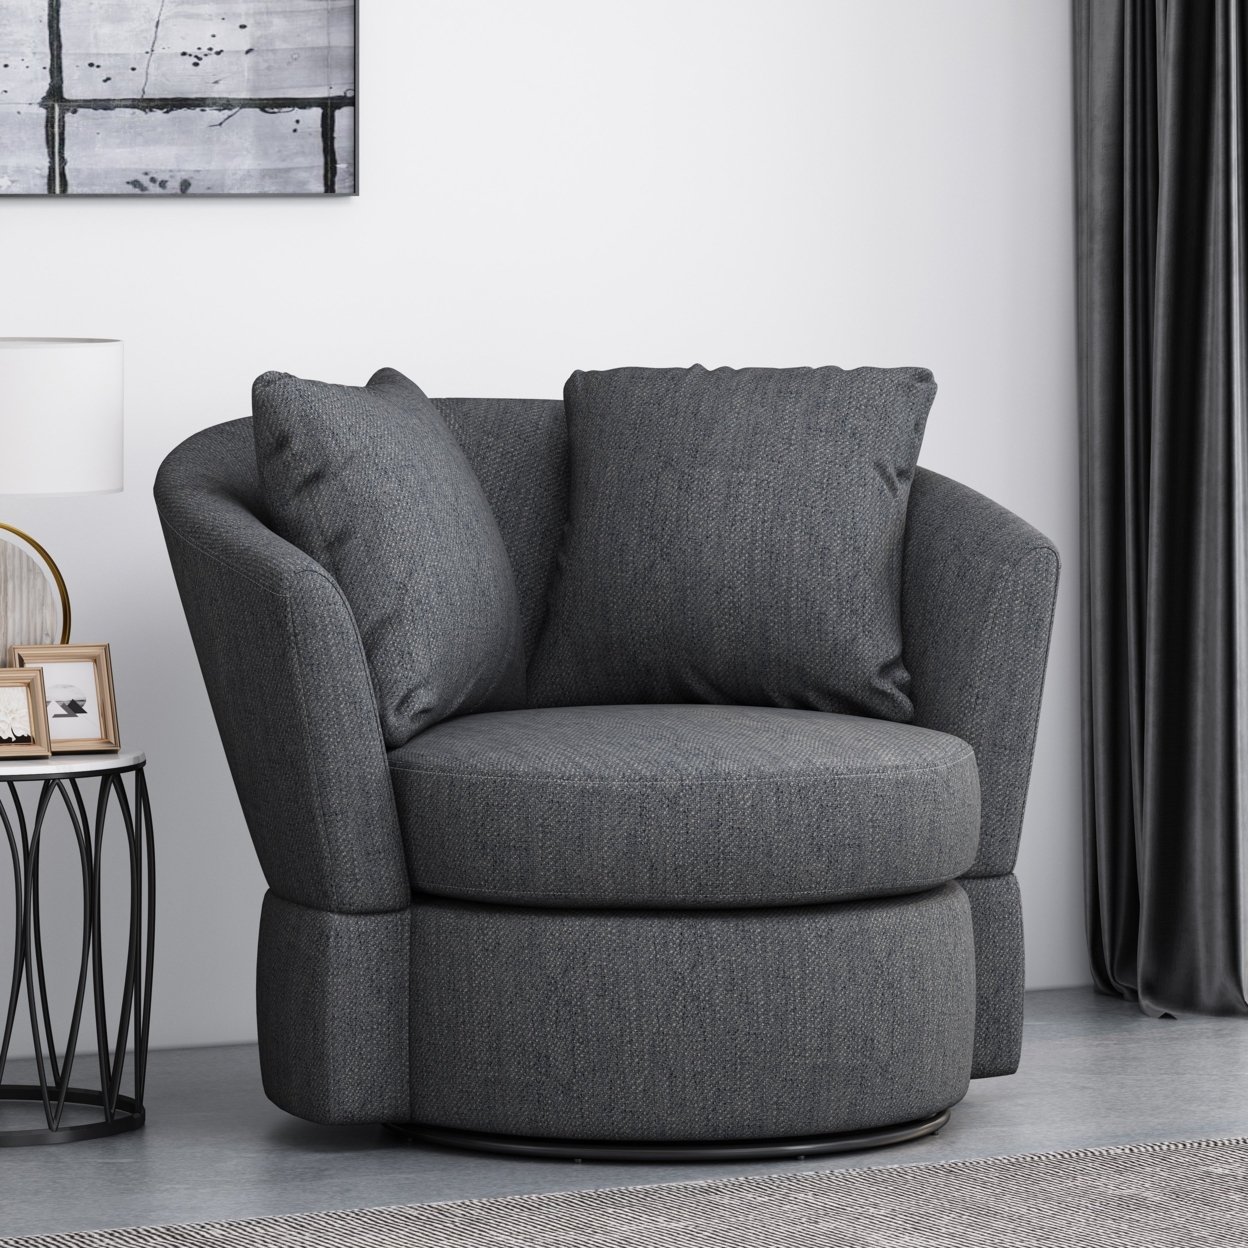 Dawson Contemporary Upholstered Swivel Club Chair - Black/beige